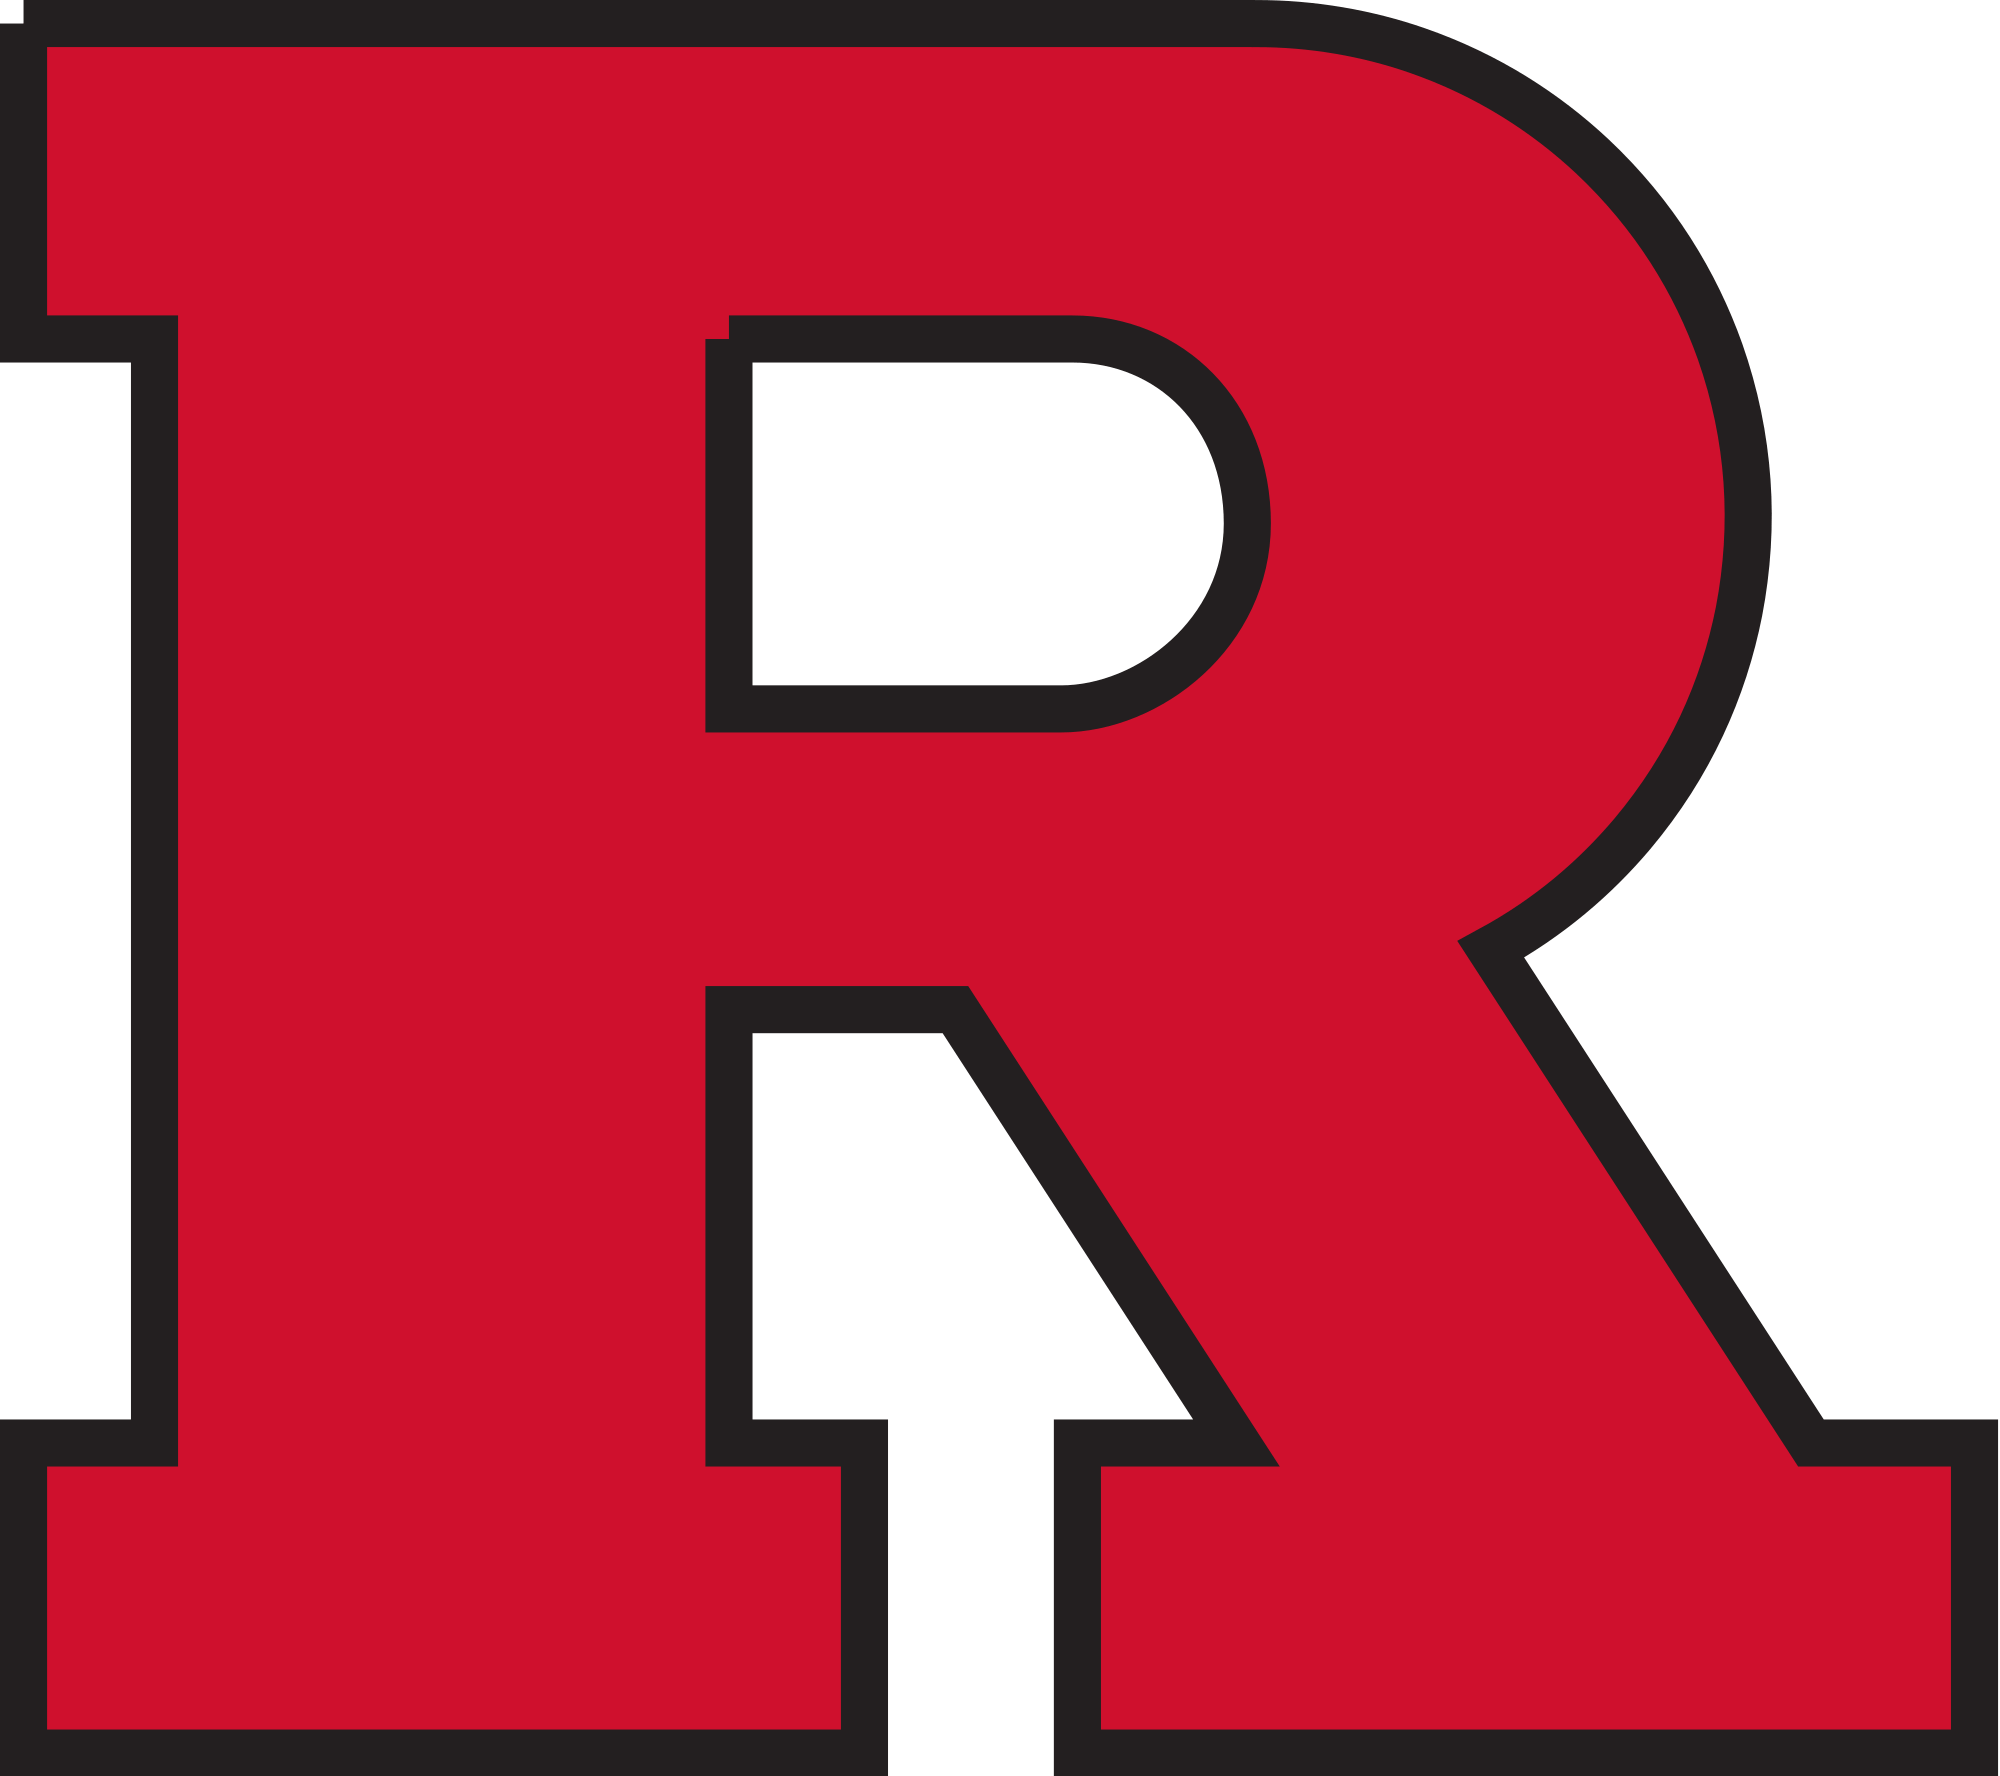 Rutgers Logo - File:Rutgers Scarlet Knights logo.svg - Wikimedia Commons